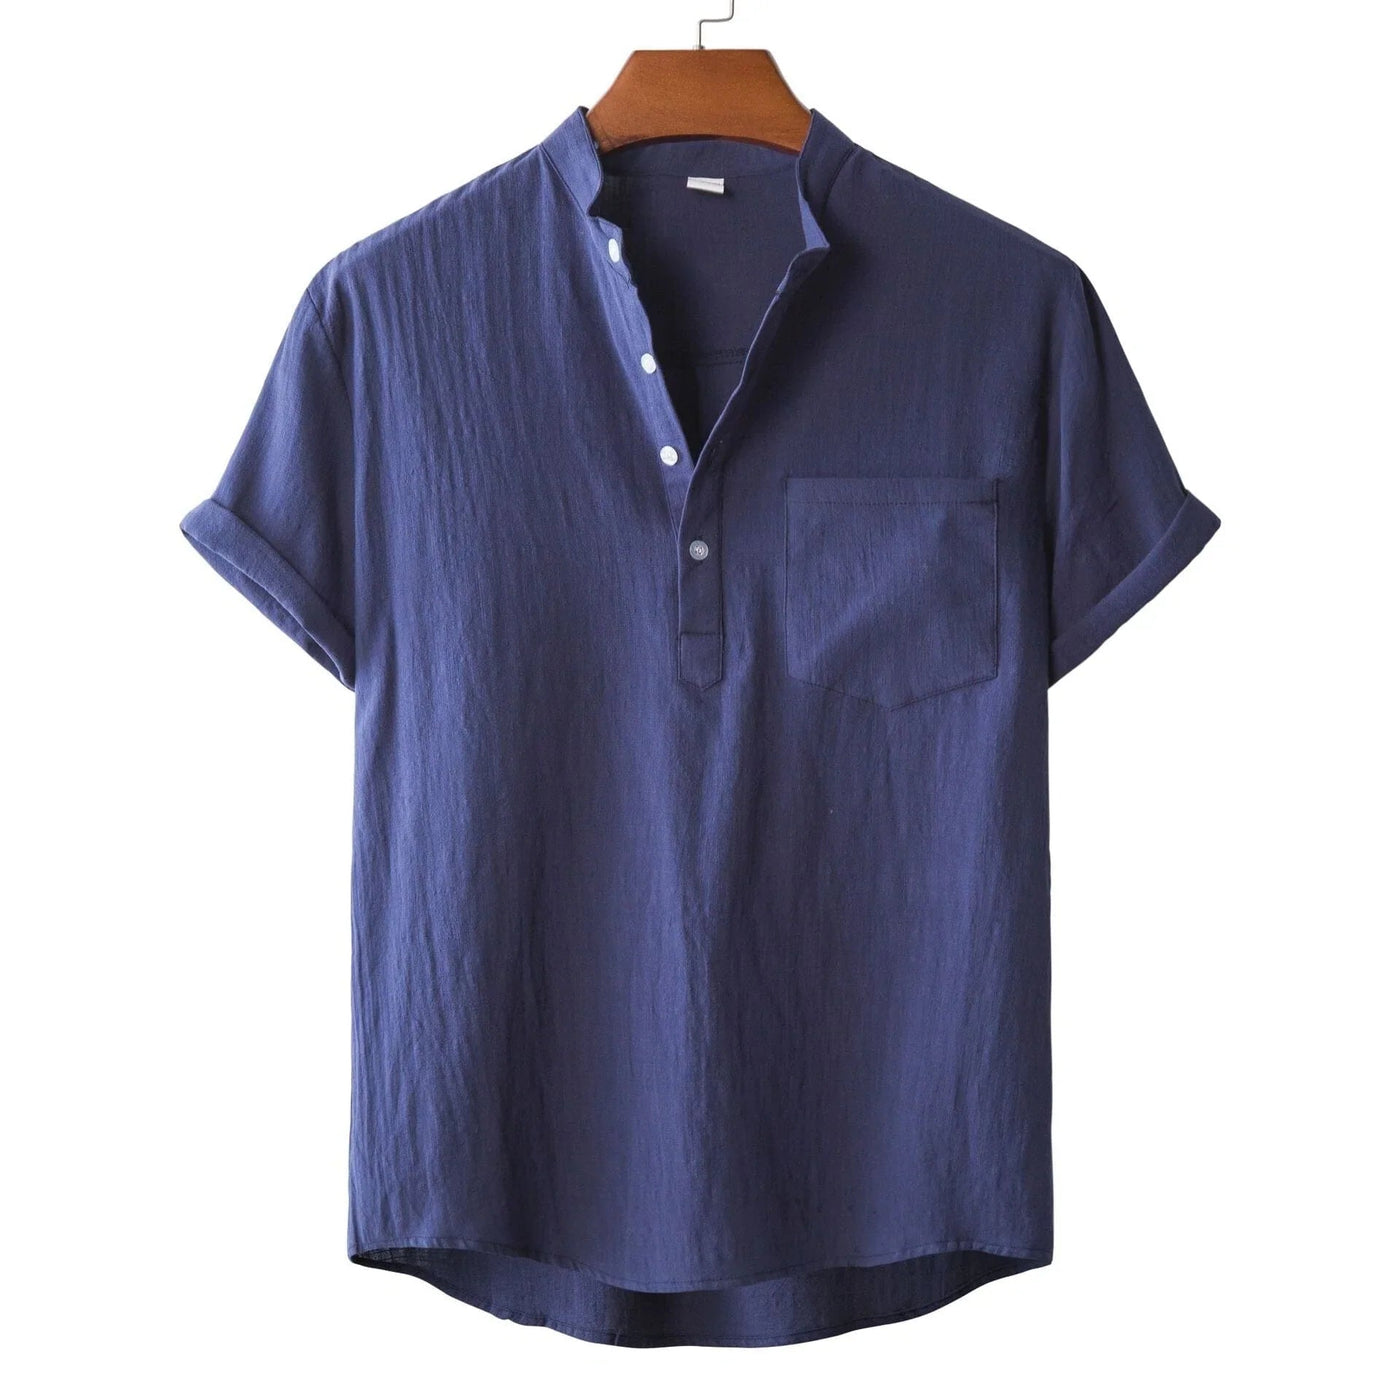 Coofandy Cotton Style Short Sleeve Shirt Shirts coofandy Navy Blue M 